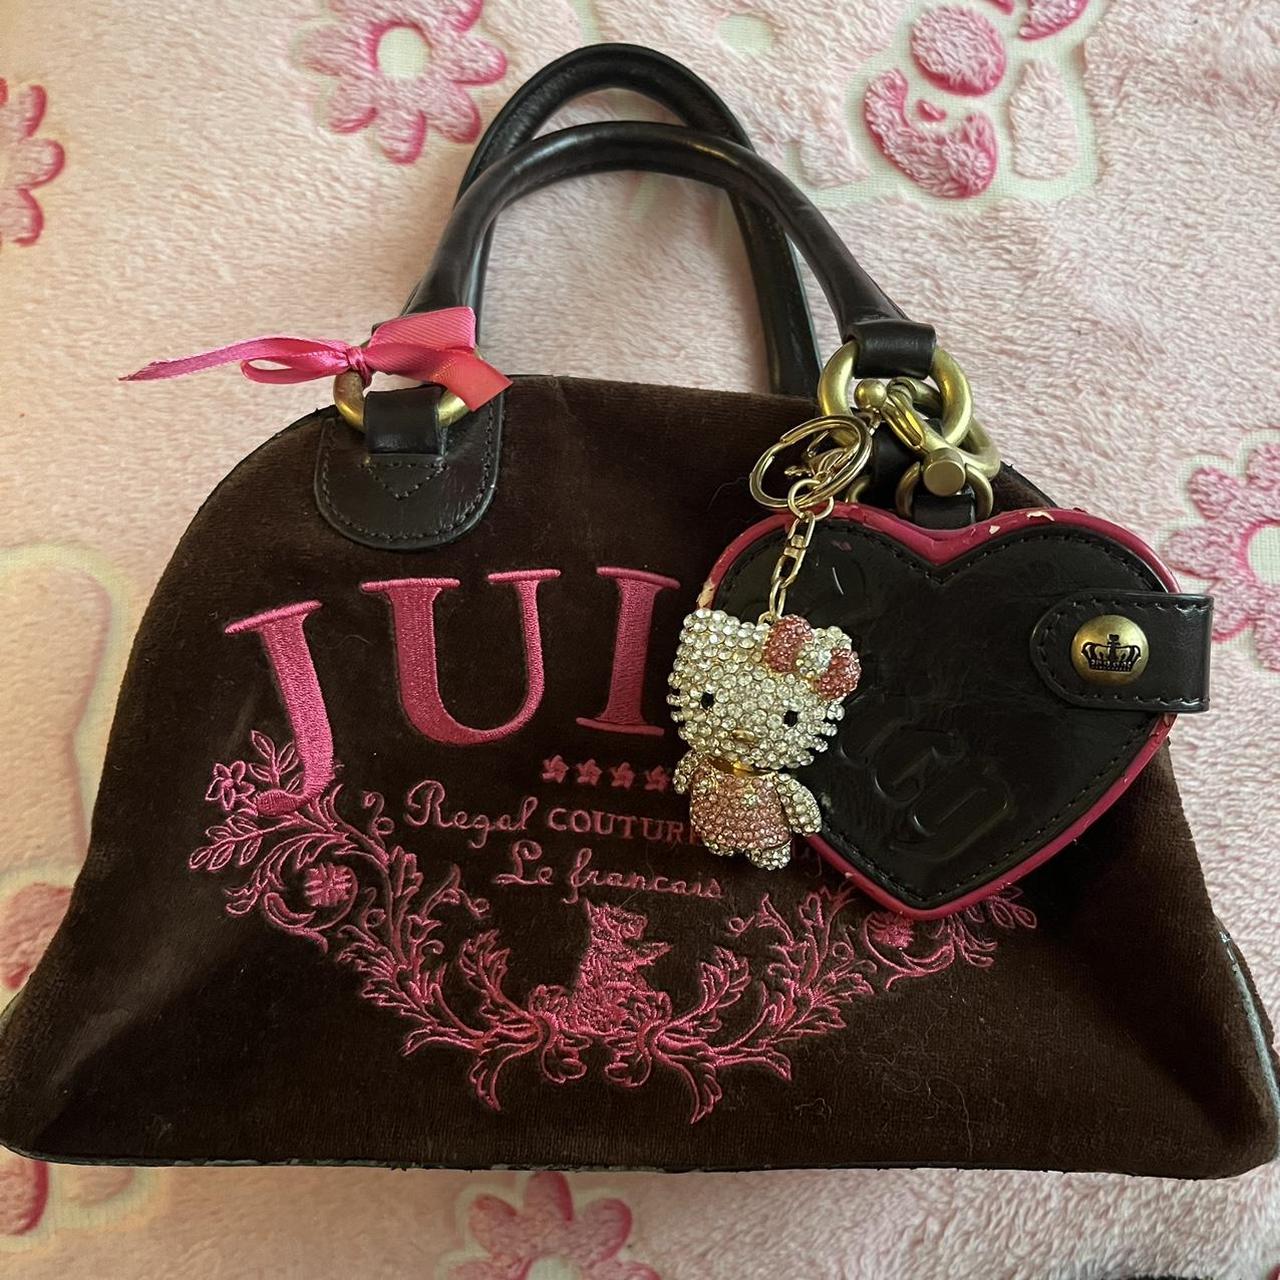 Juicy Couture If The Crown Fits Brown Satchel Canvas Handbag - Women's  handbags